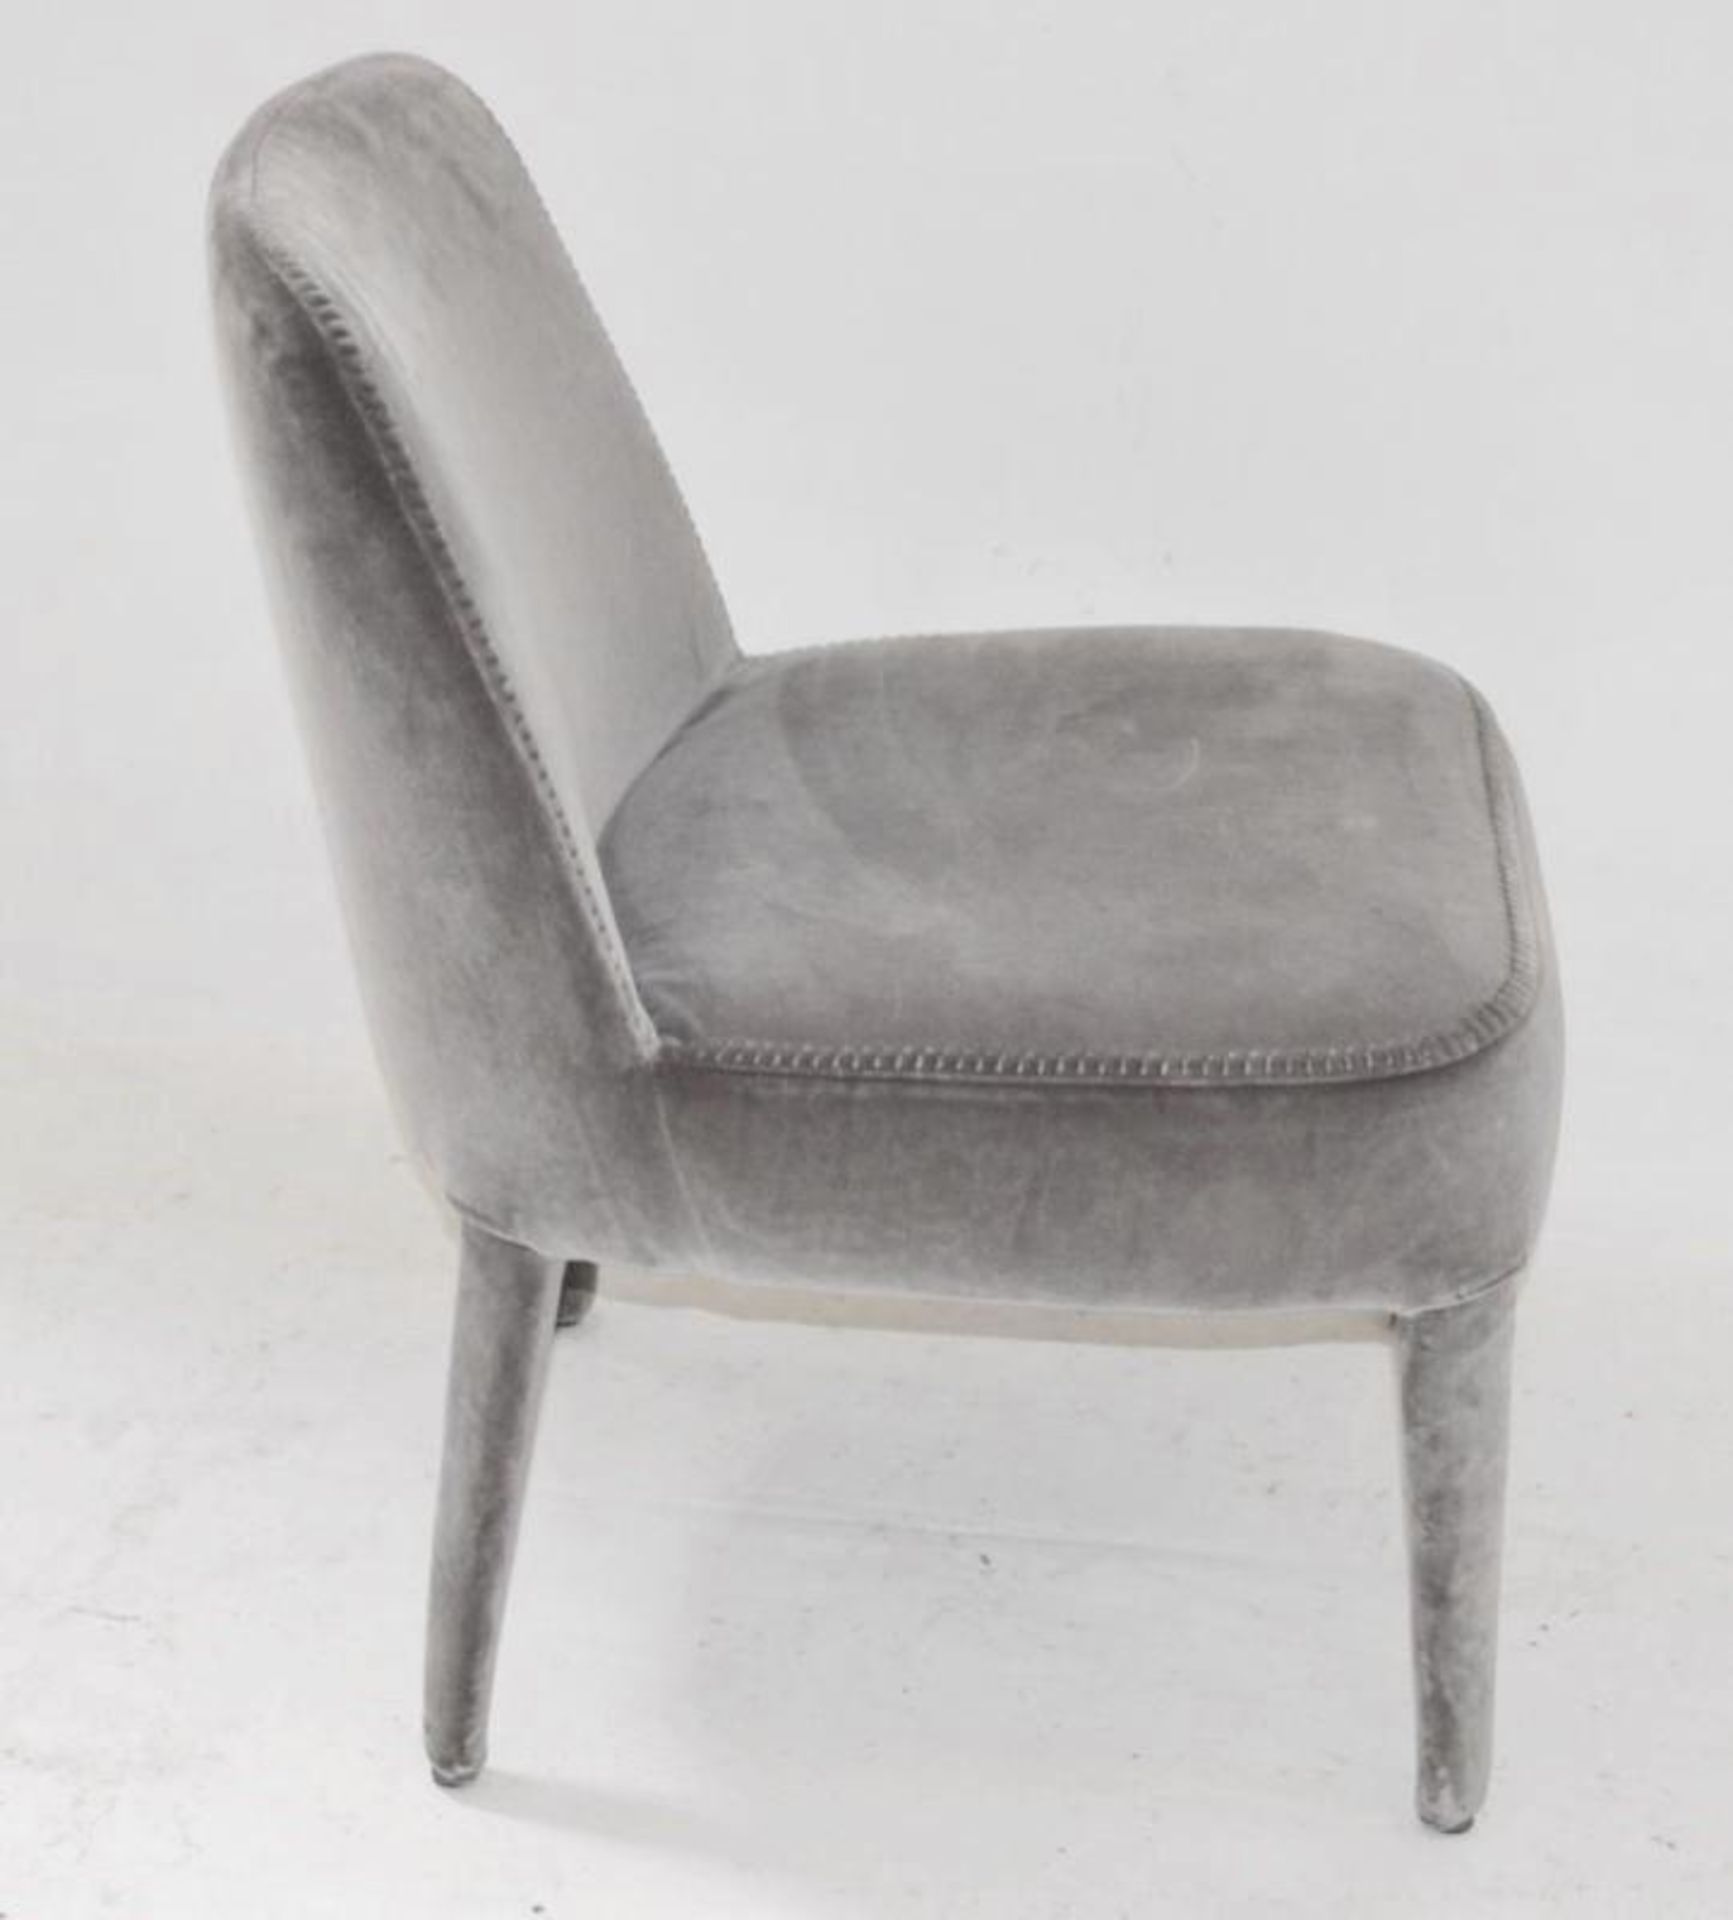 3 x Matching B&B ITALIA Maxalto "Febo" Designer Chairs In An Opulent GREY Velvet Fabric - Ex-Display